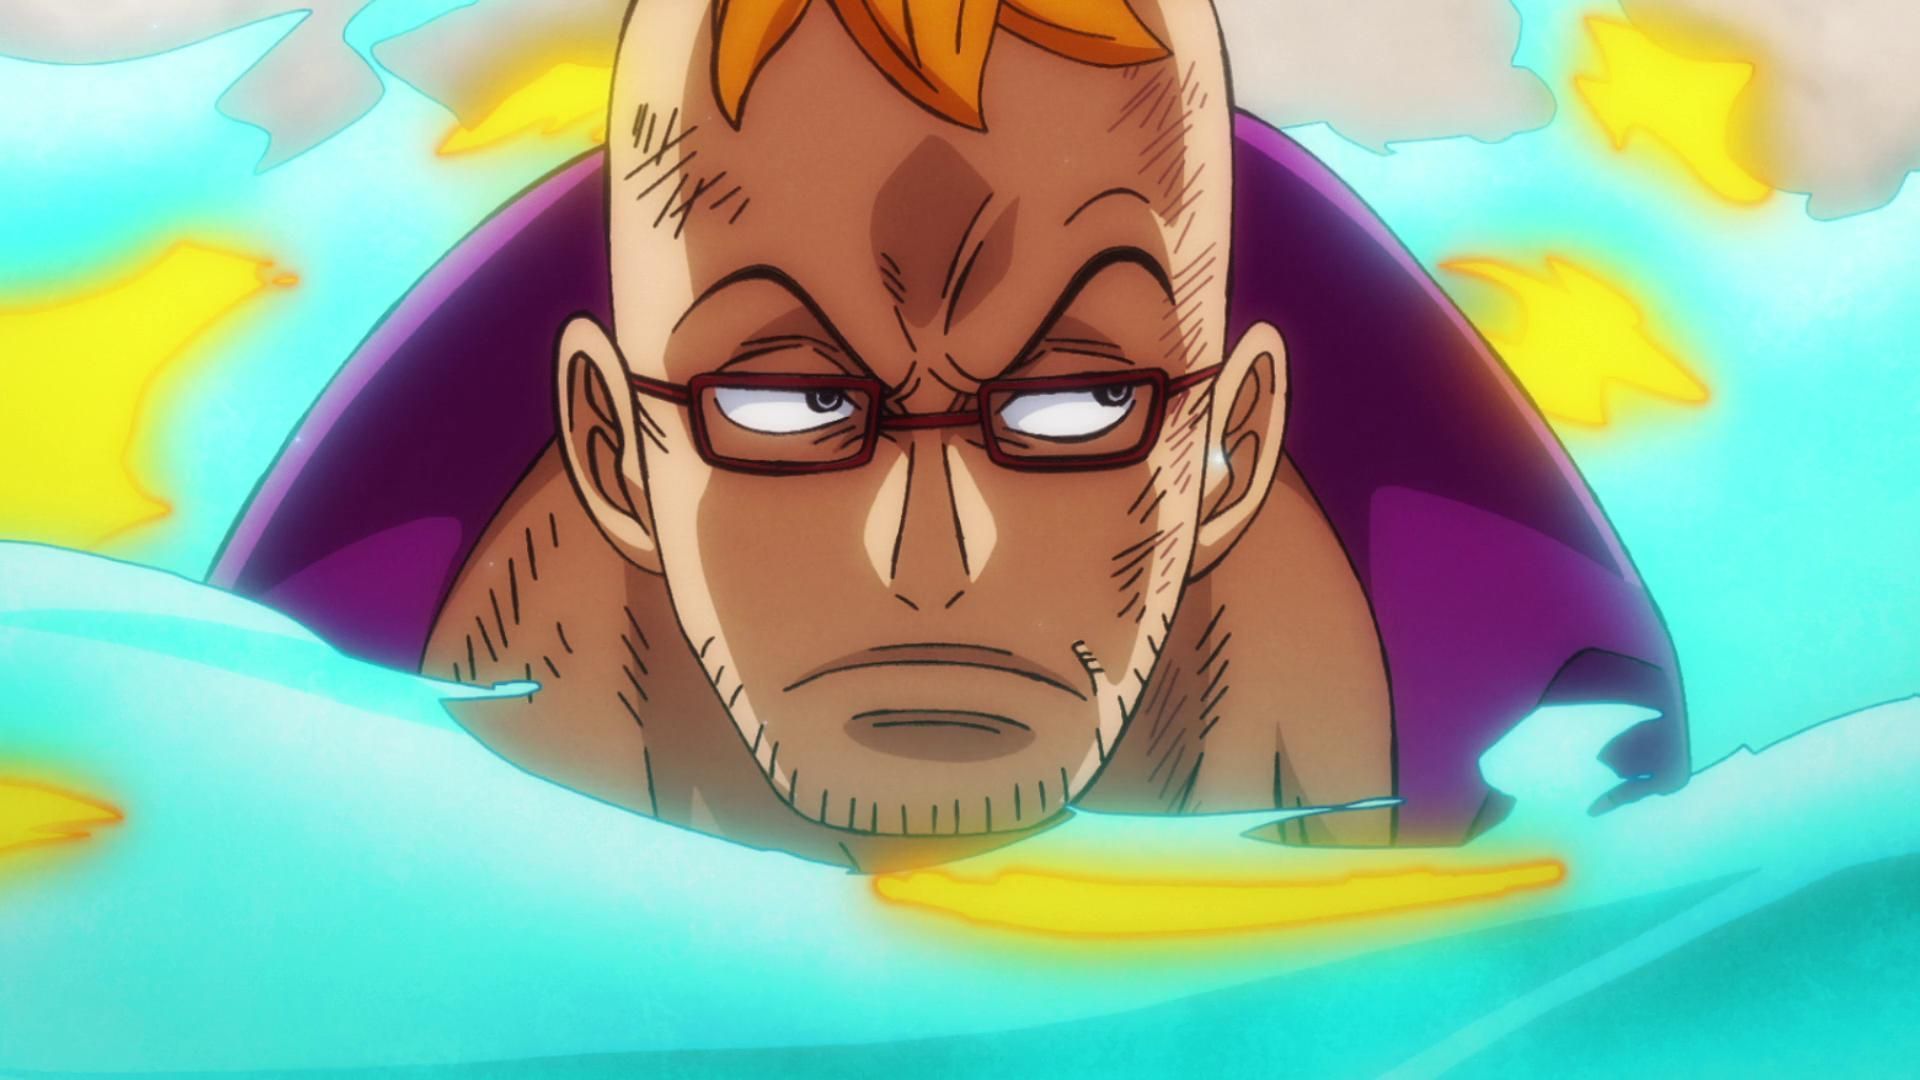 Marco (Image via Toei Animation, One Piece)